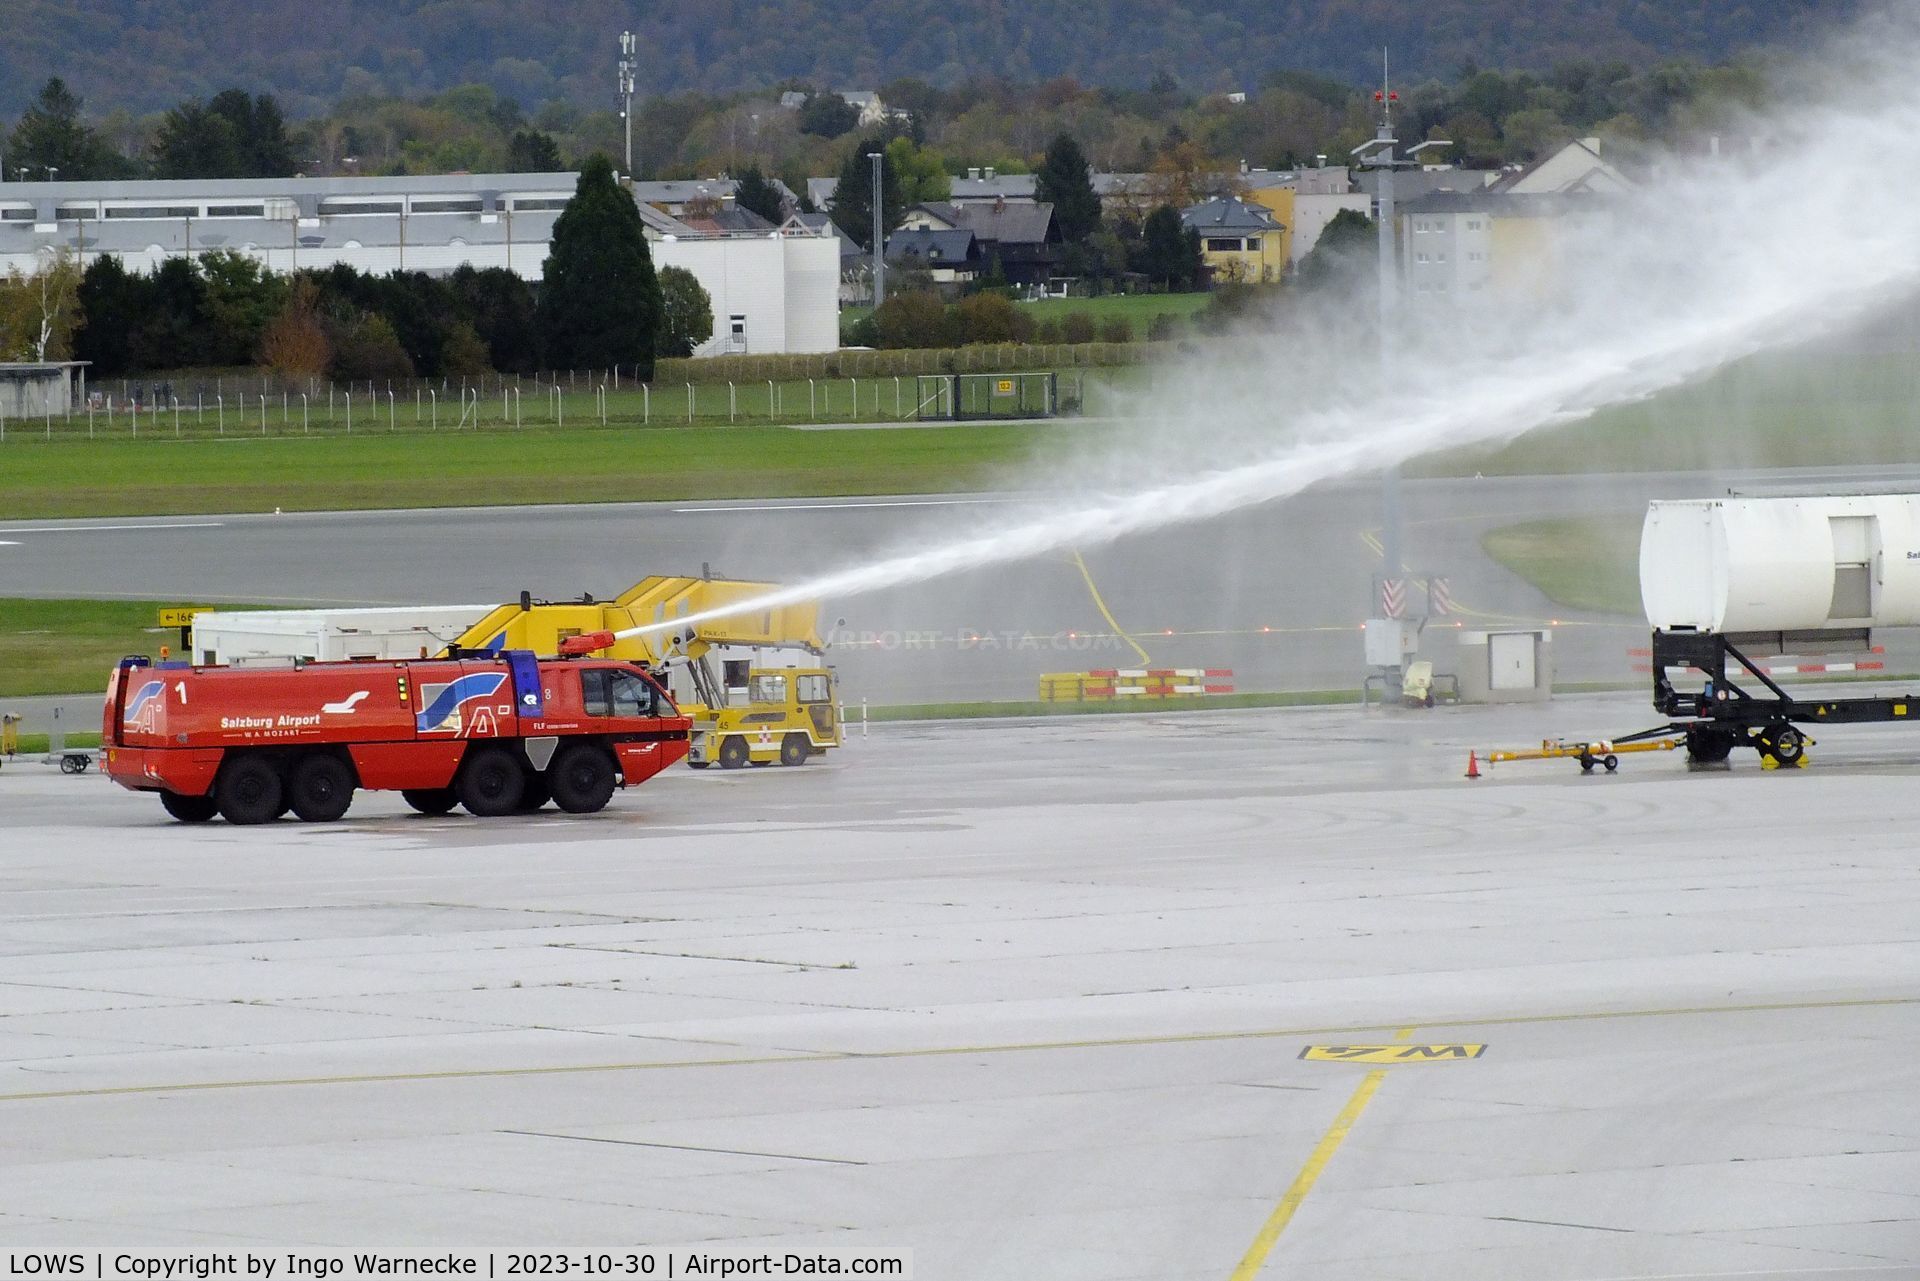 Salzburg Airport, Salzburg Austria (LOWS) - airport fire truck exercising with training trailer at Salzburg airport